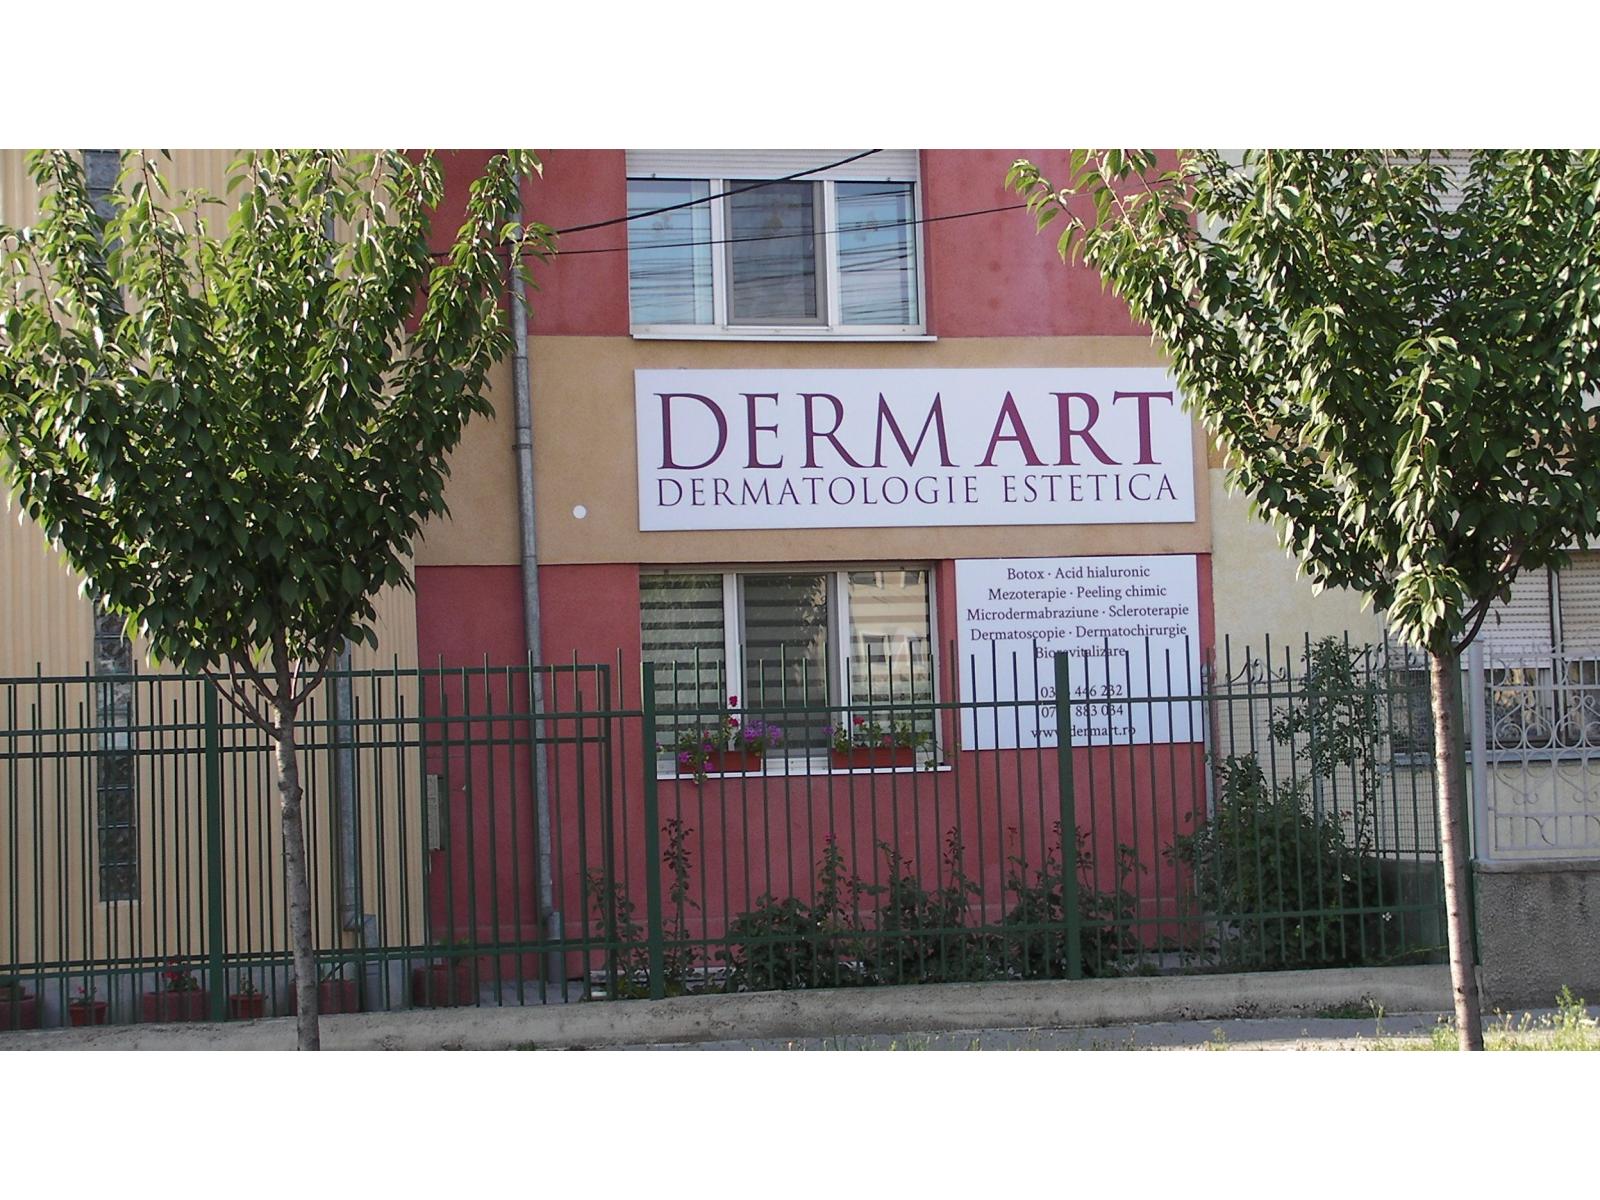 DERMART cabinet medical de dermatologie estetica - SANY0181.JPG